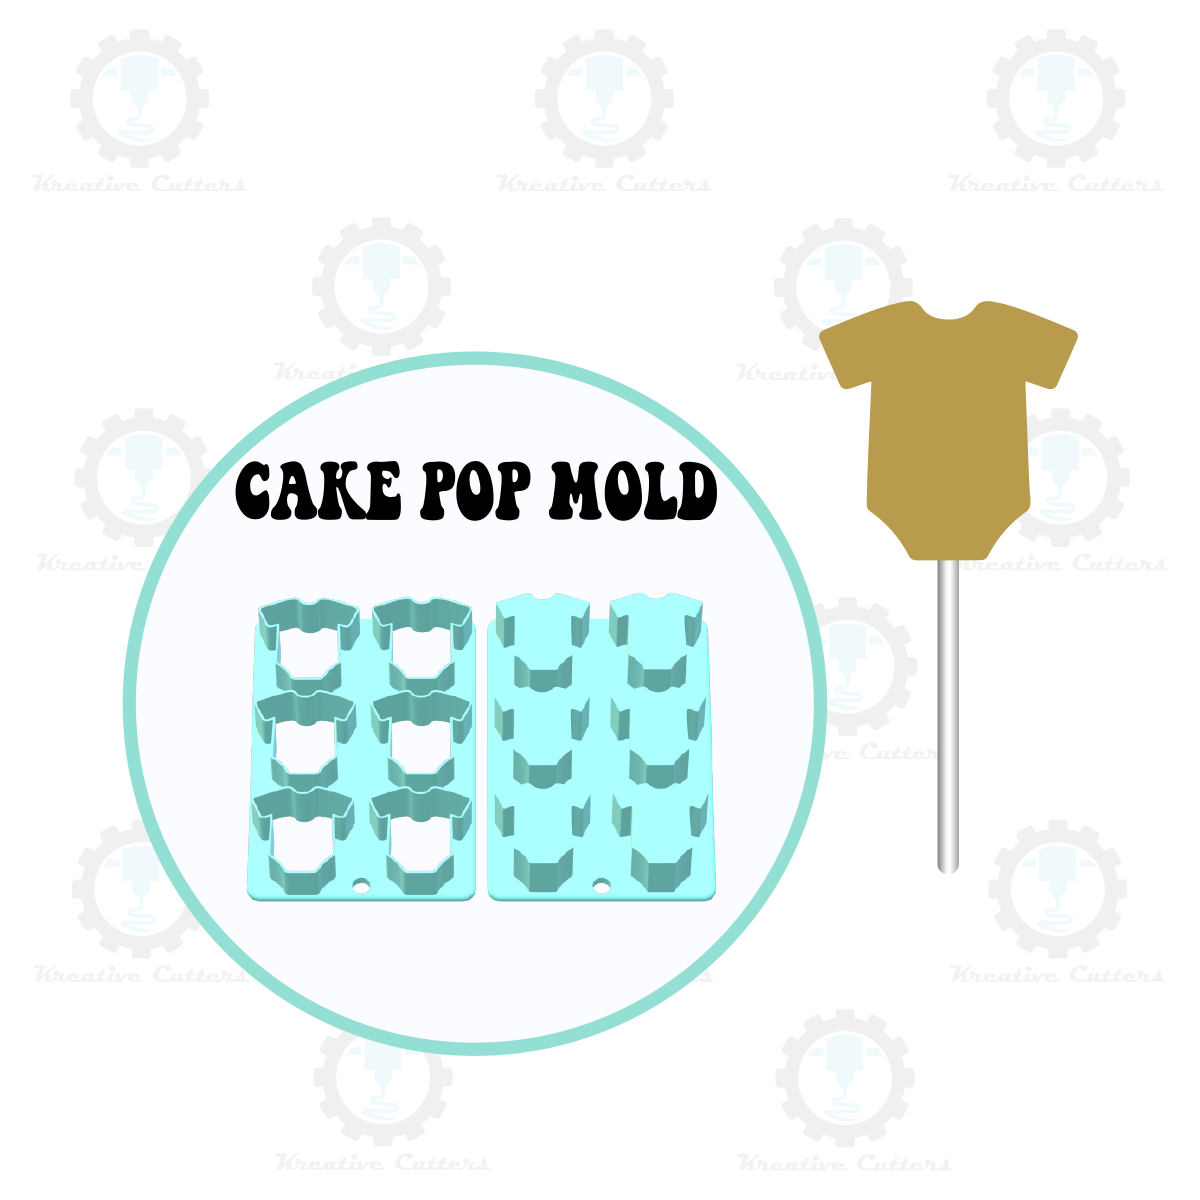 Baby Body Suit Cake Pop Mold | Single or Multi-popper